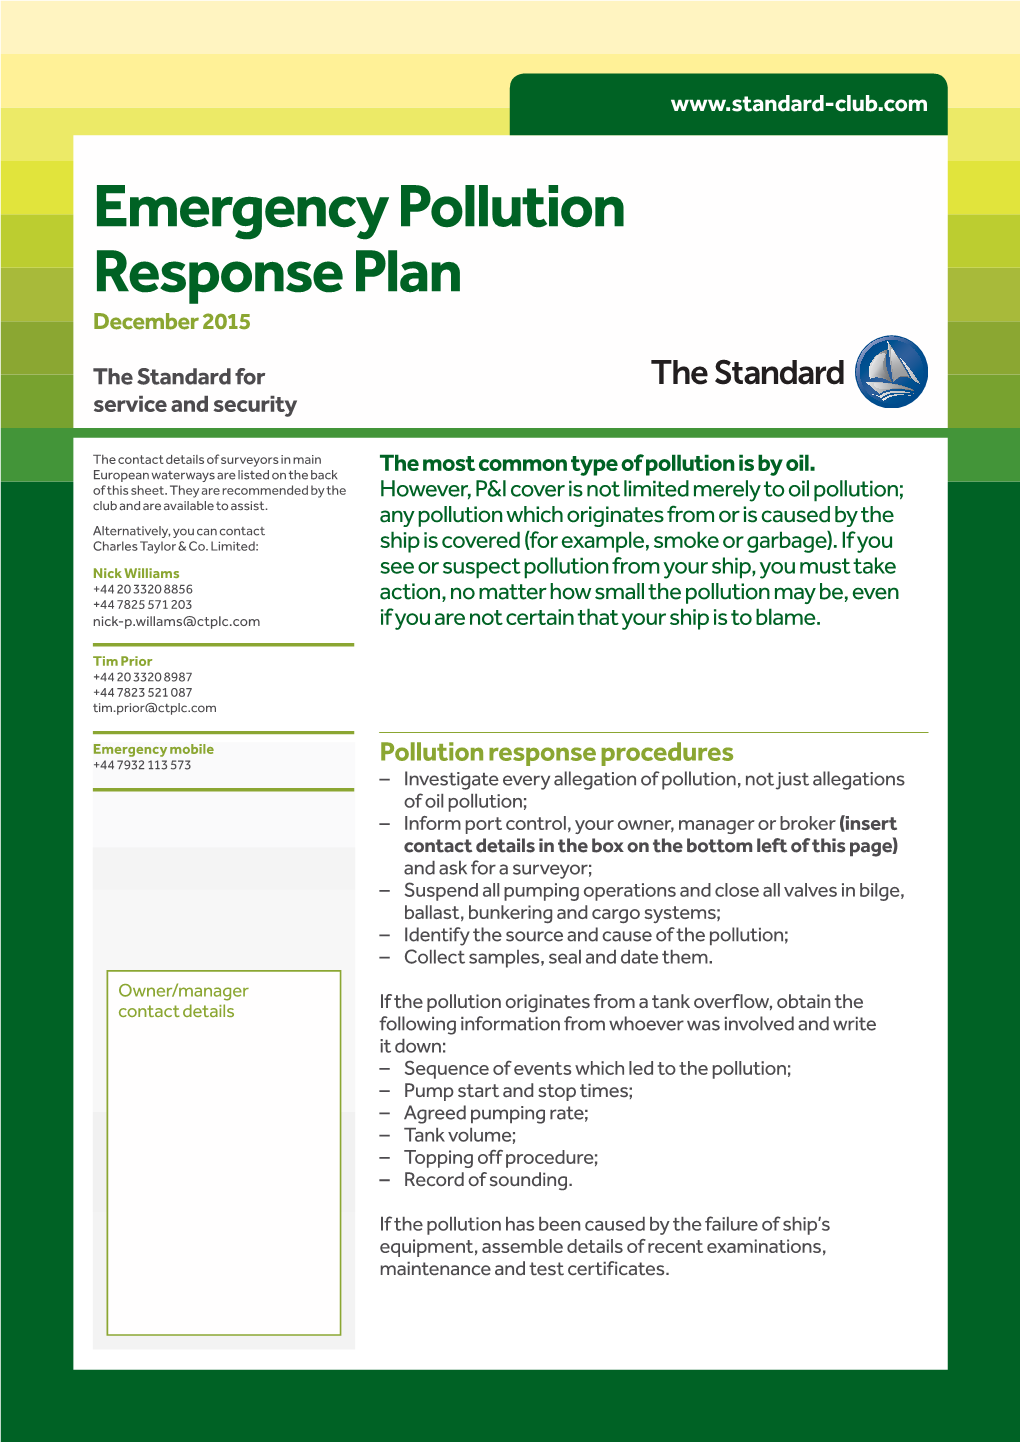 Emergency Pollution Response Plan December 2015